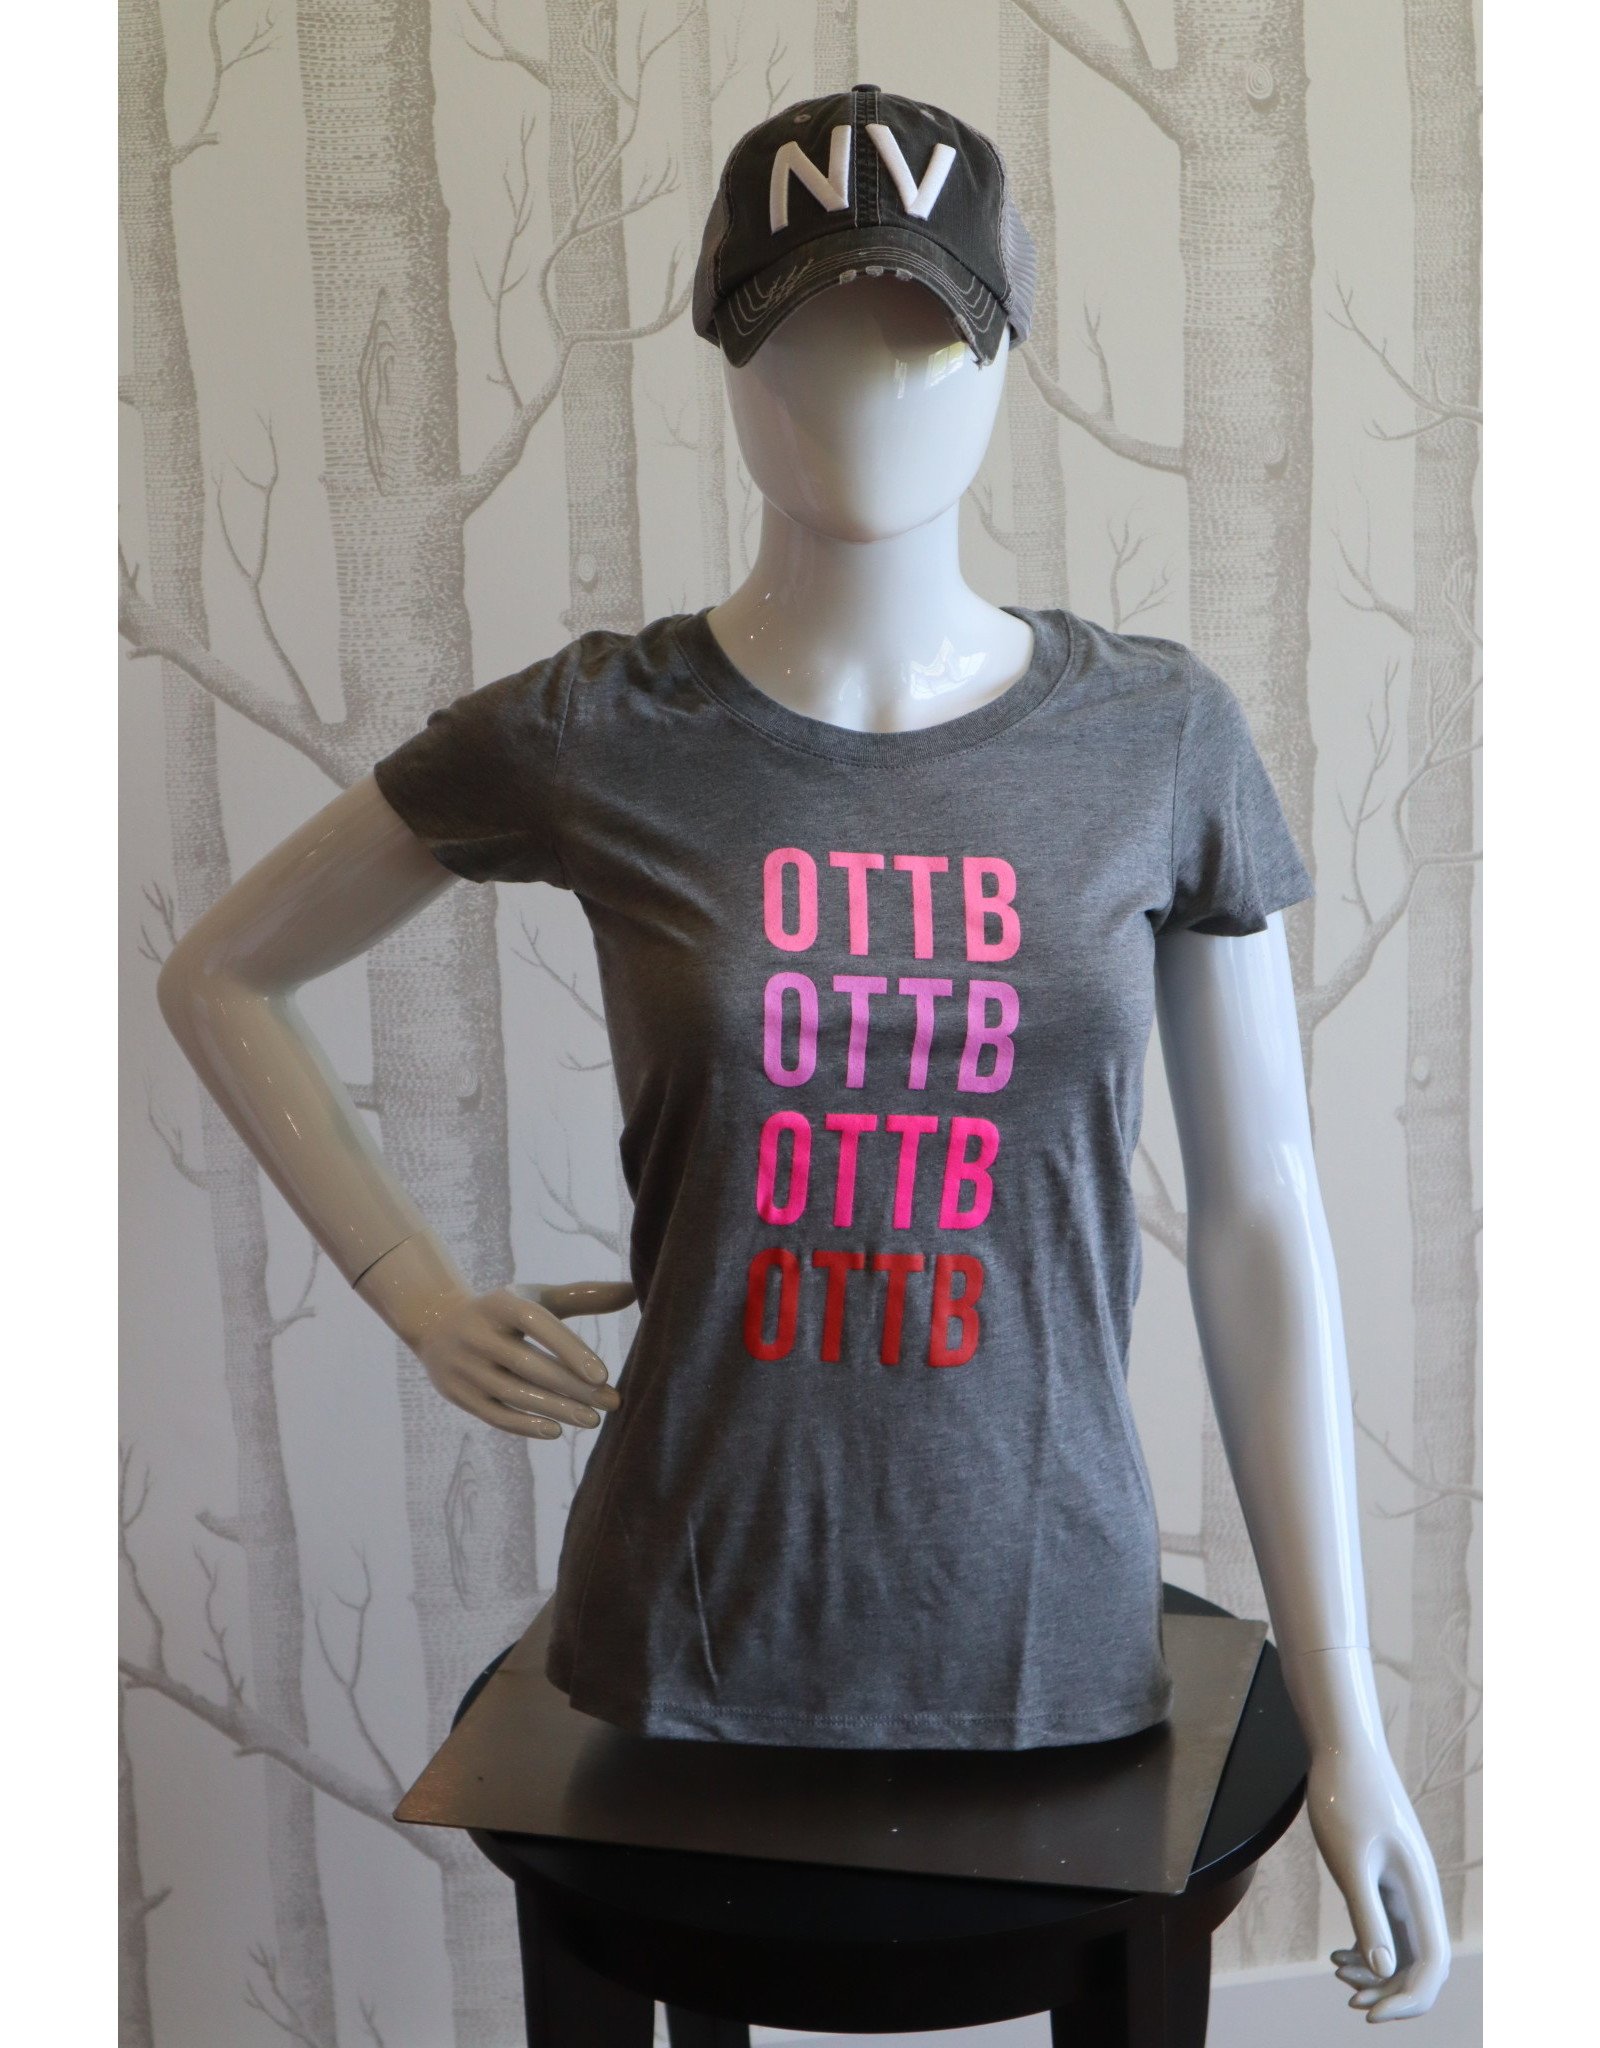 Grey OTTB in Deepening Colors T-Shirt (Women's cut)